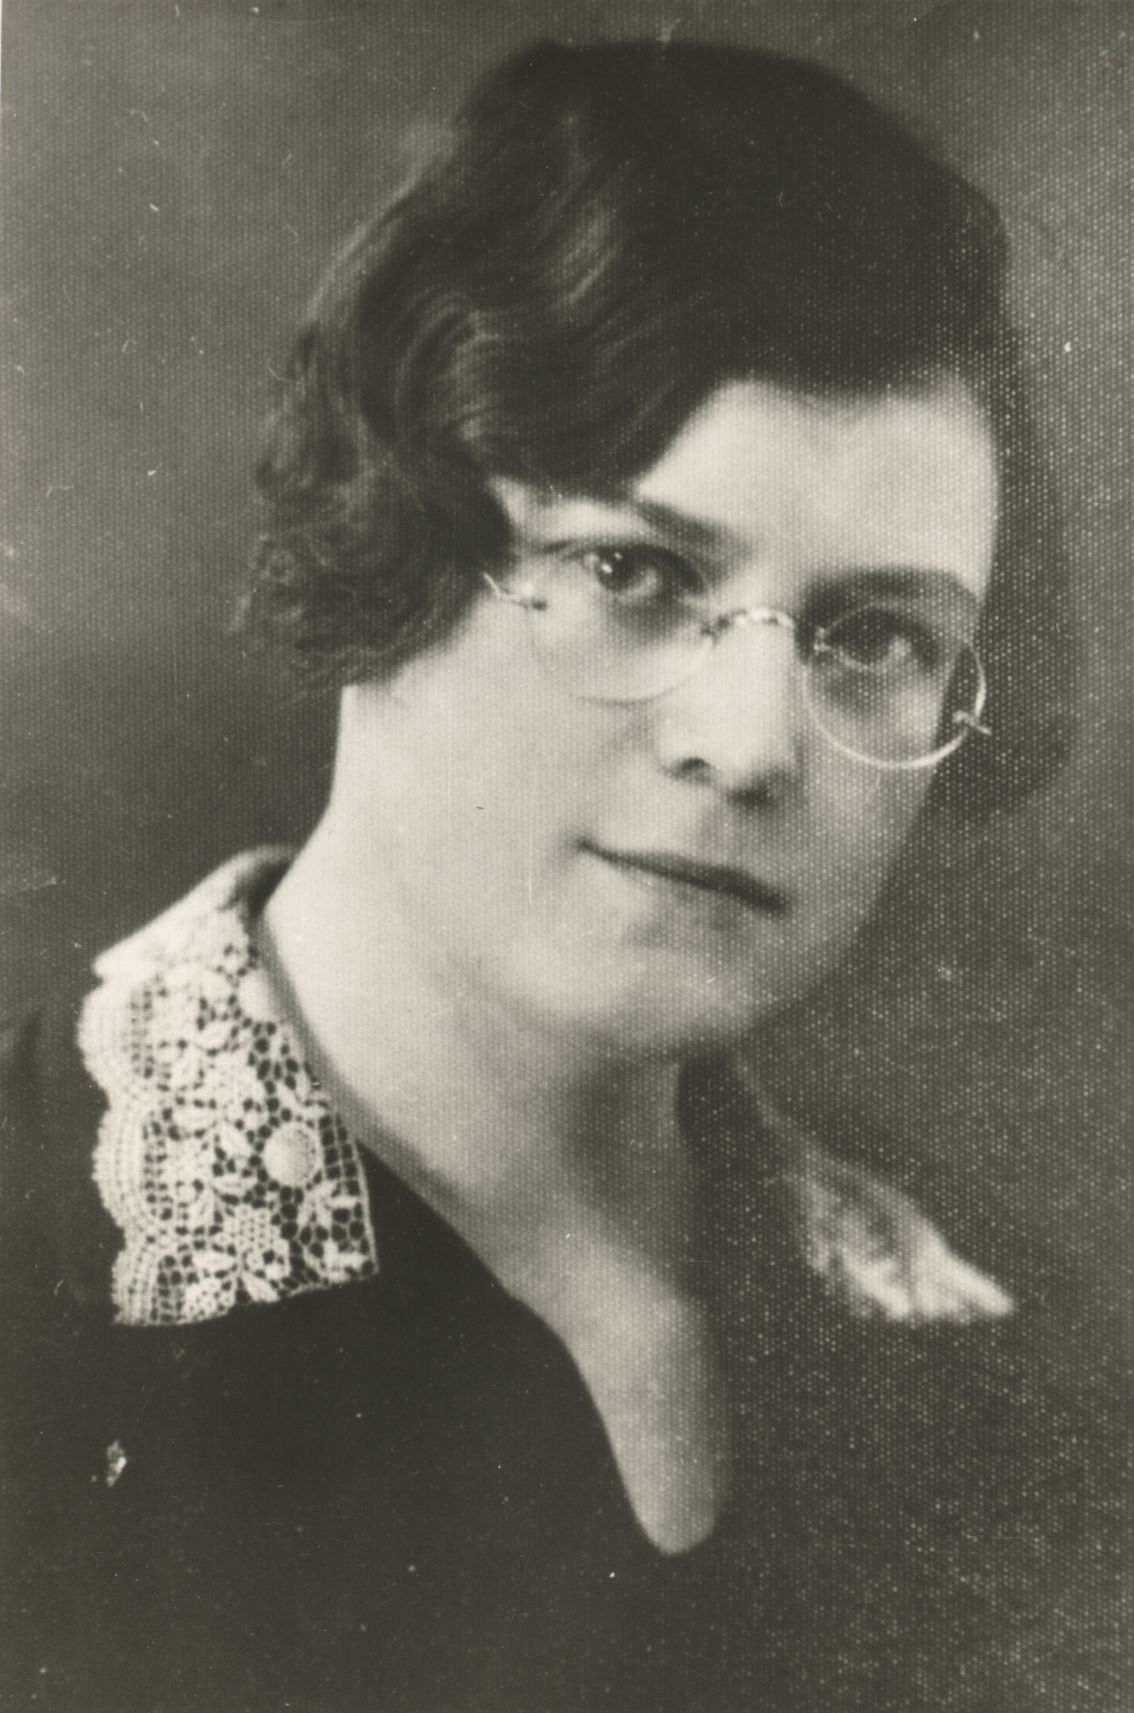 Jaan Kärner's second wife Hilda Kärner in 1930